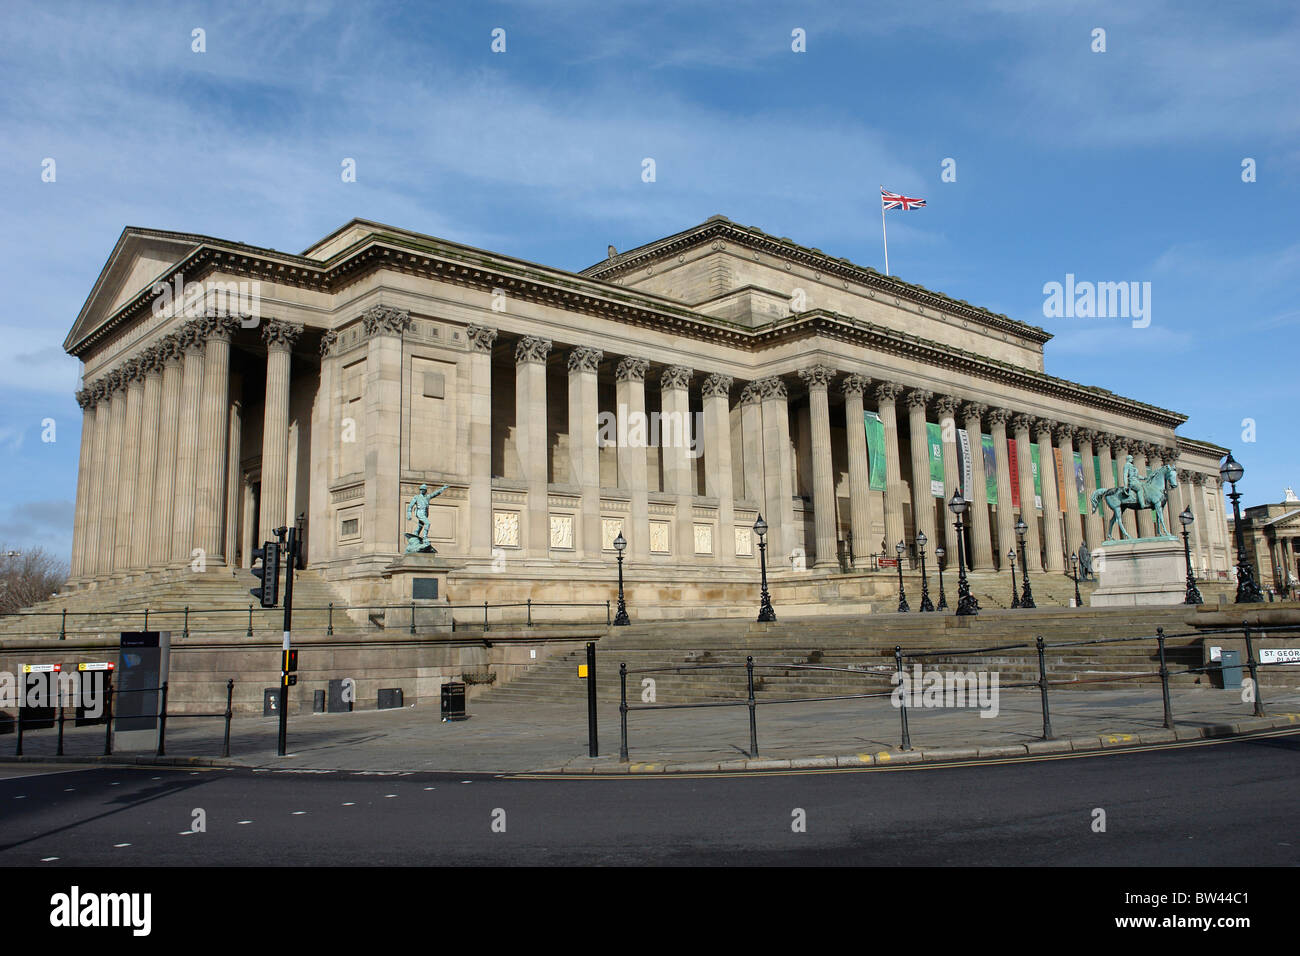 St George's Hall, St George's Plateau, Liverpool, Merseyside, England, United Kingdom Banque D'Images